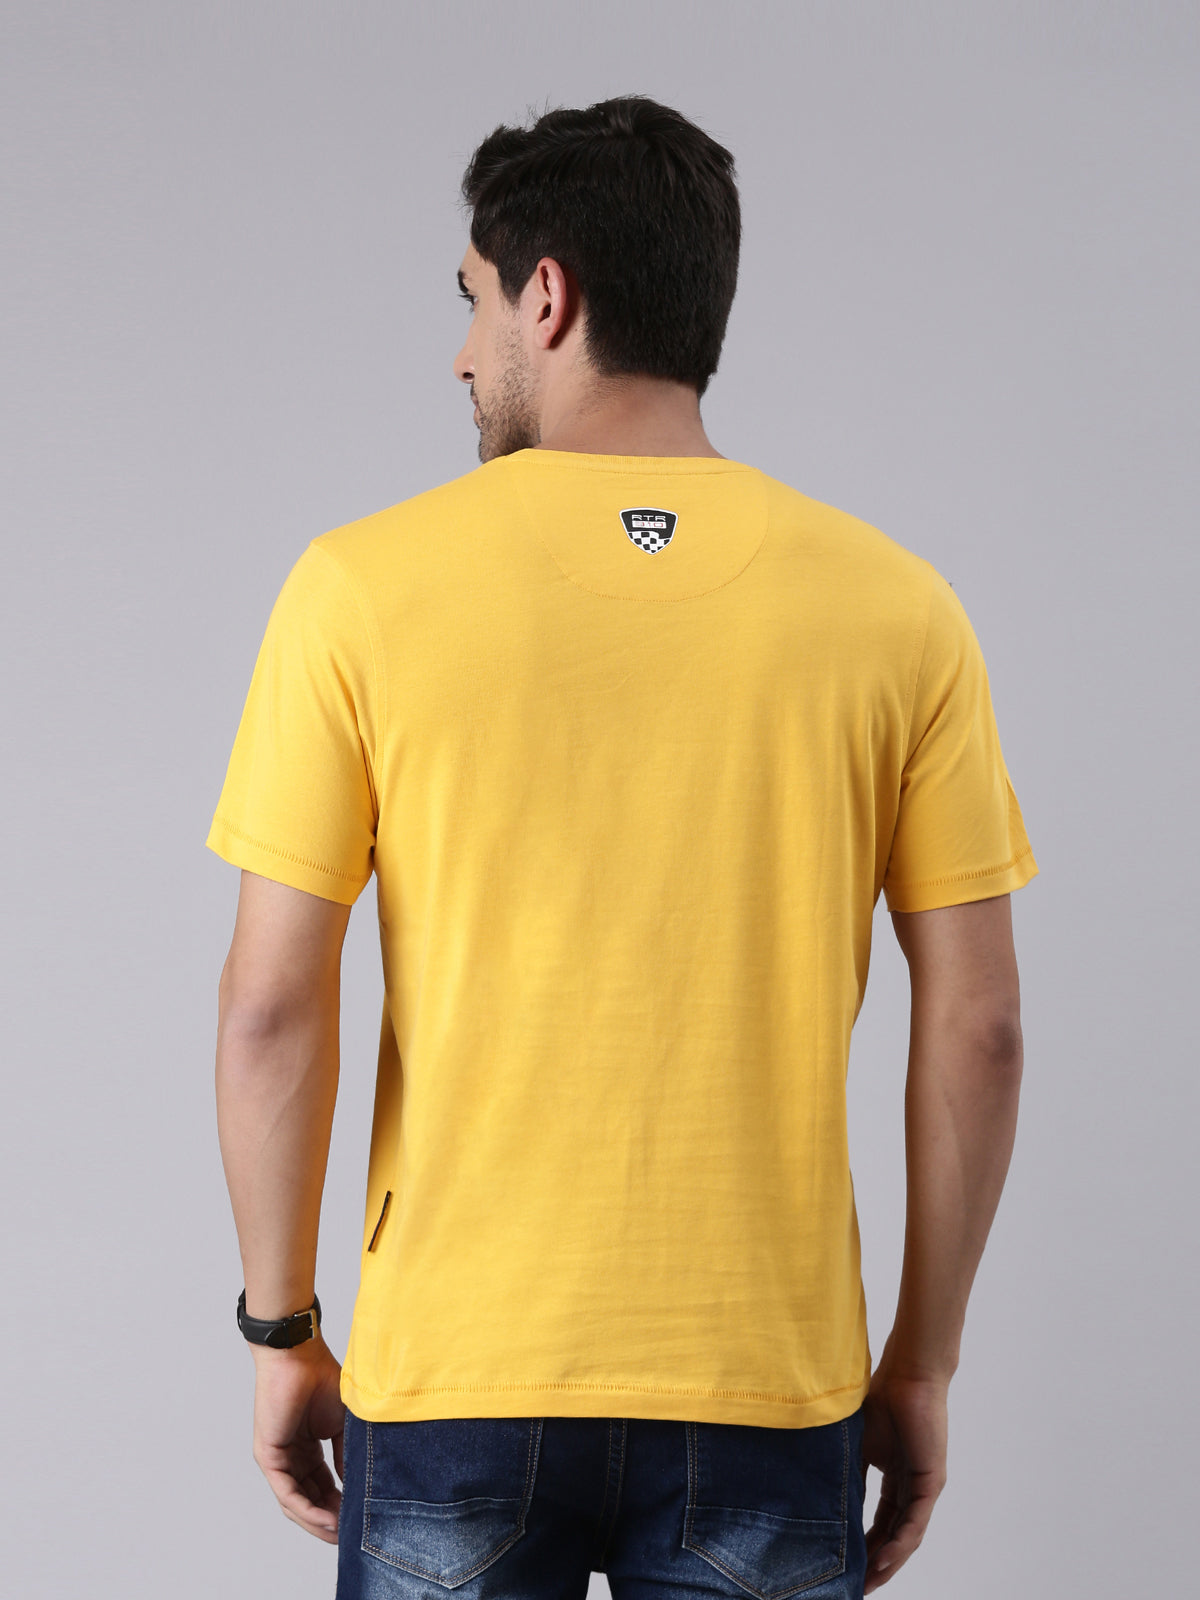  TVS Racing Fury Yellow Cyborg Crew neck T Shirt